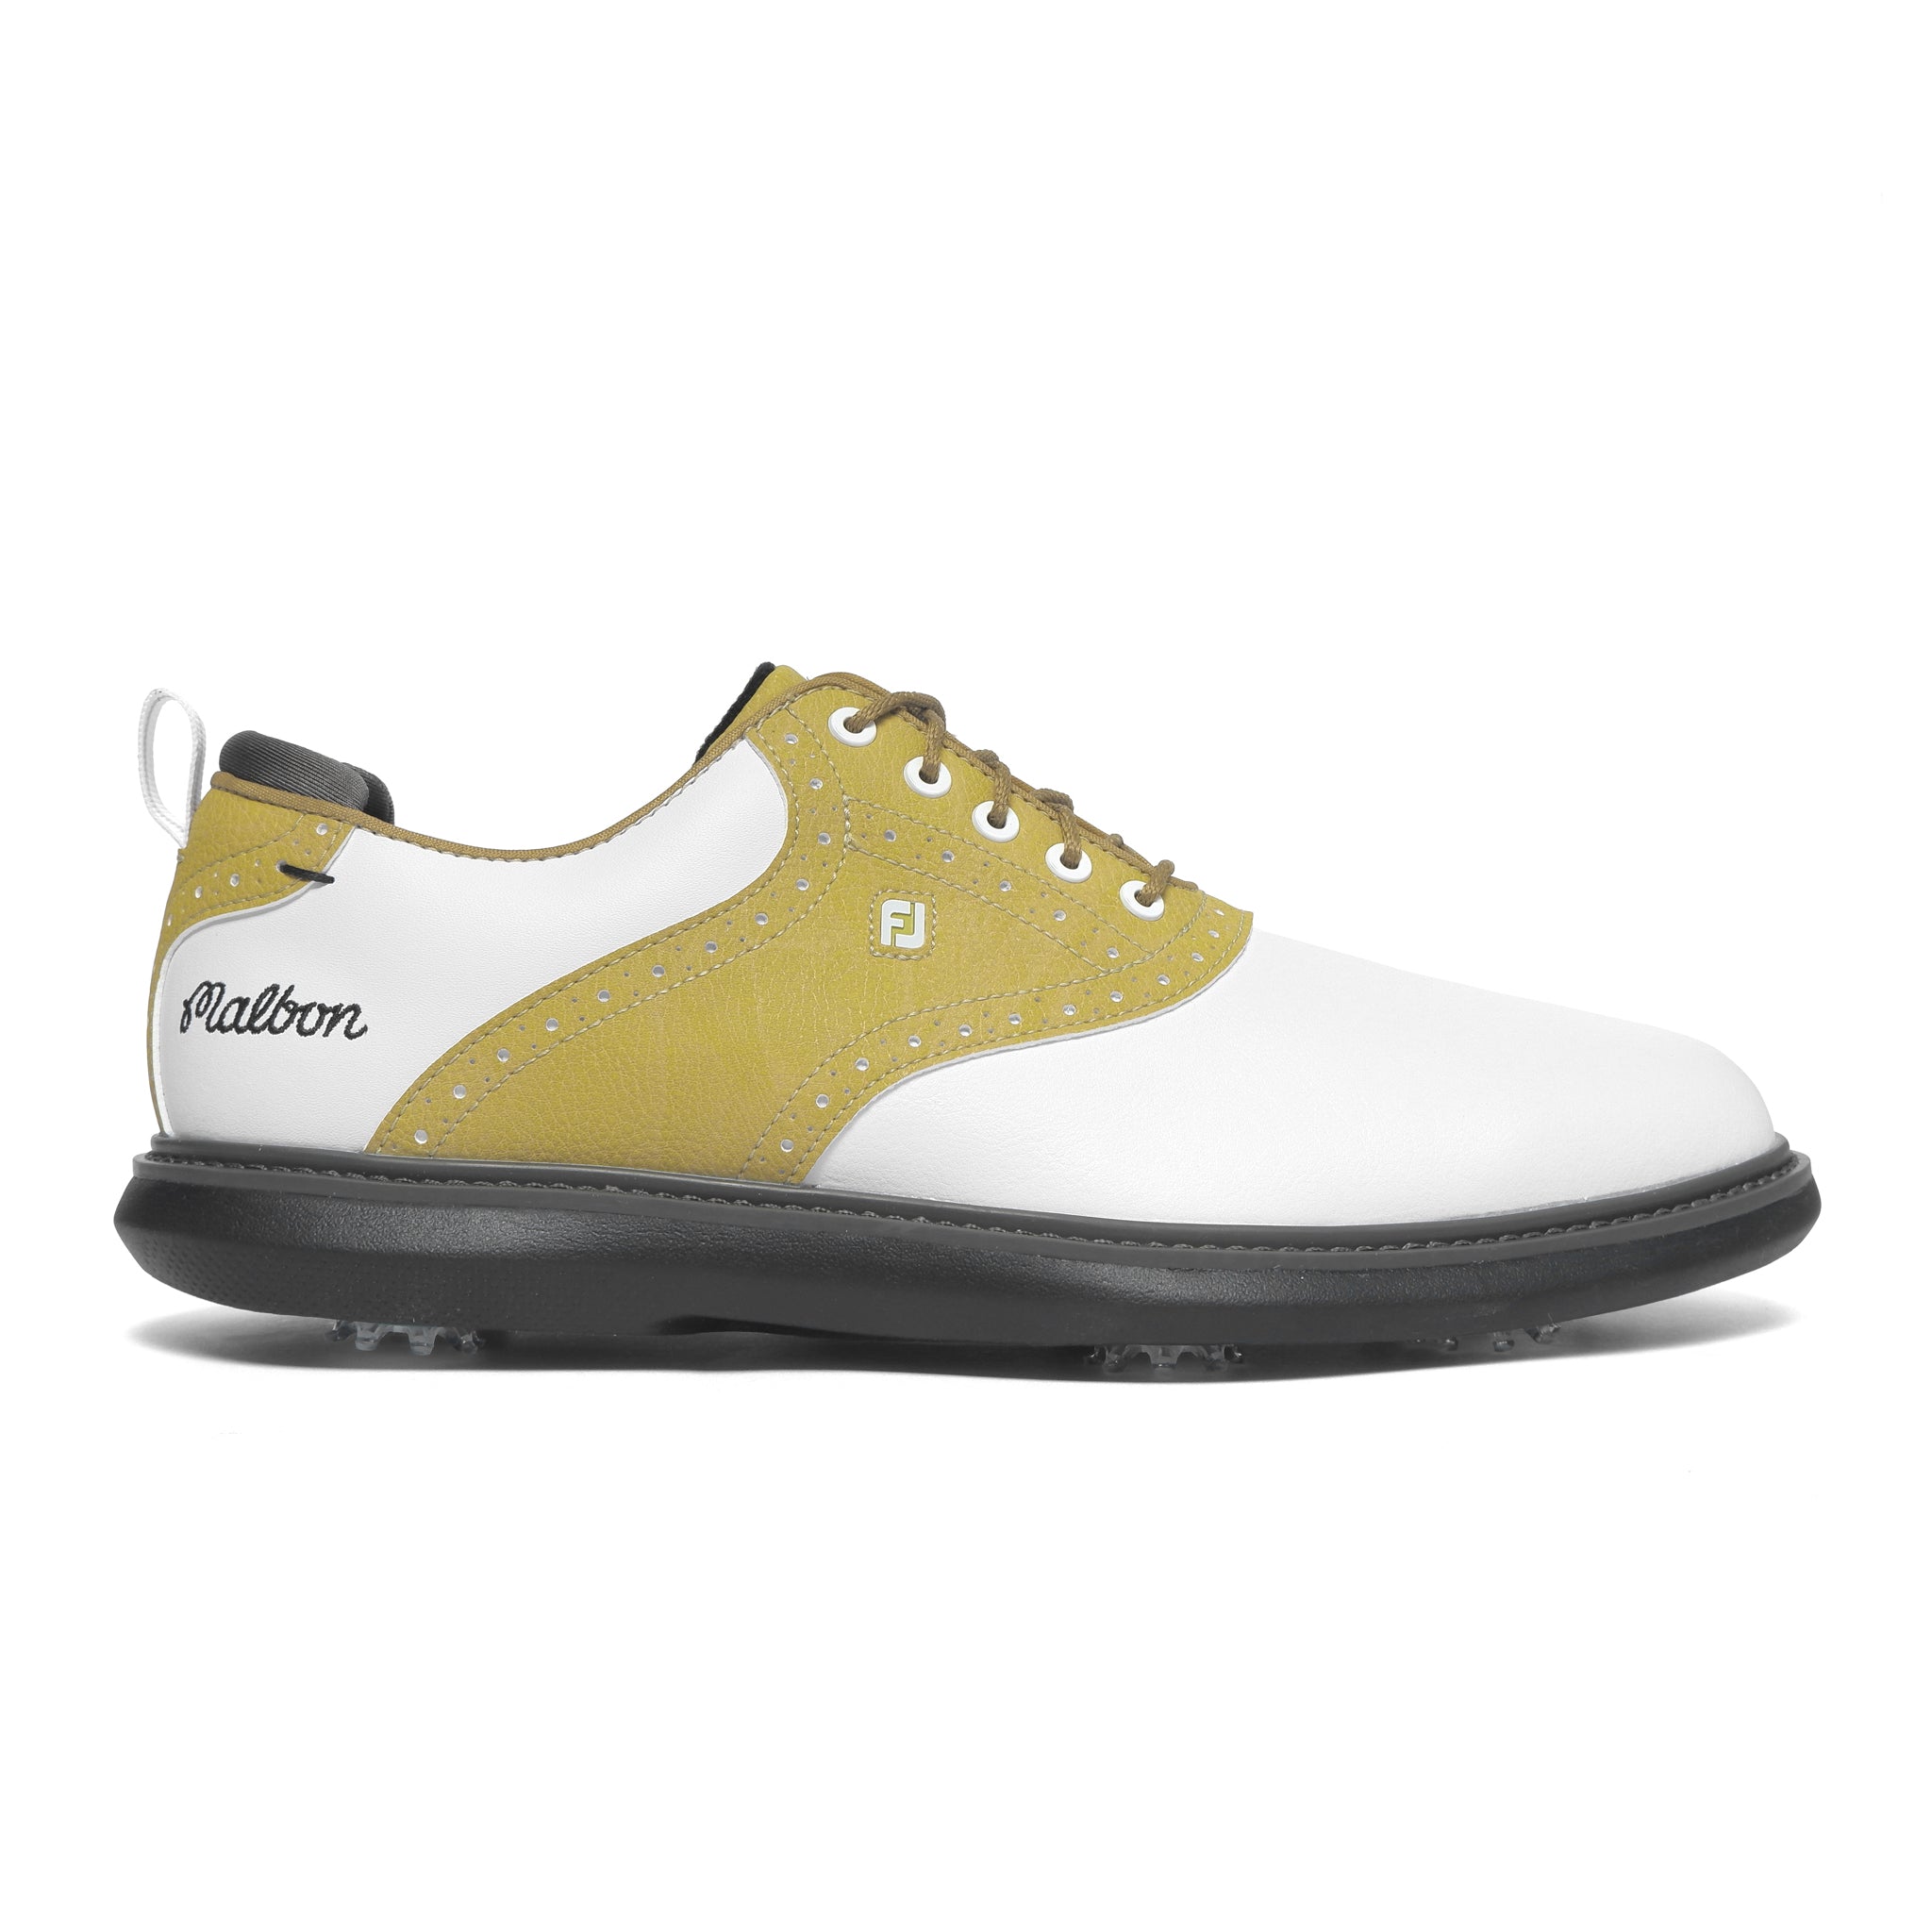 Comfy Golf Shoe Recommendations - #ASKMARK - Customer Questions 